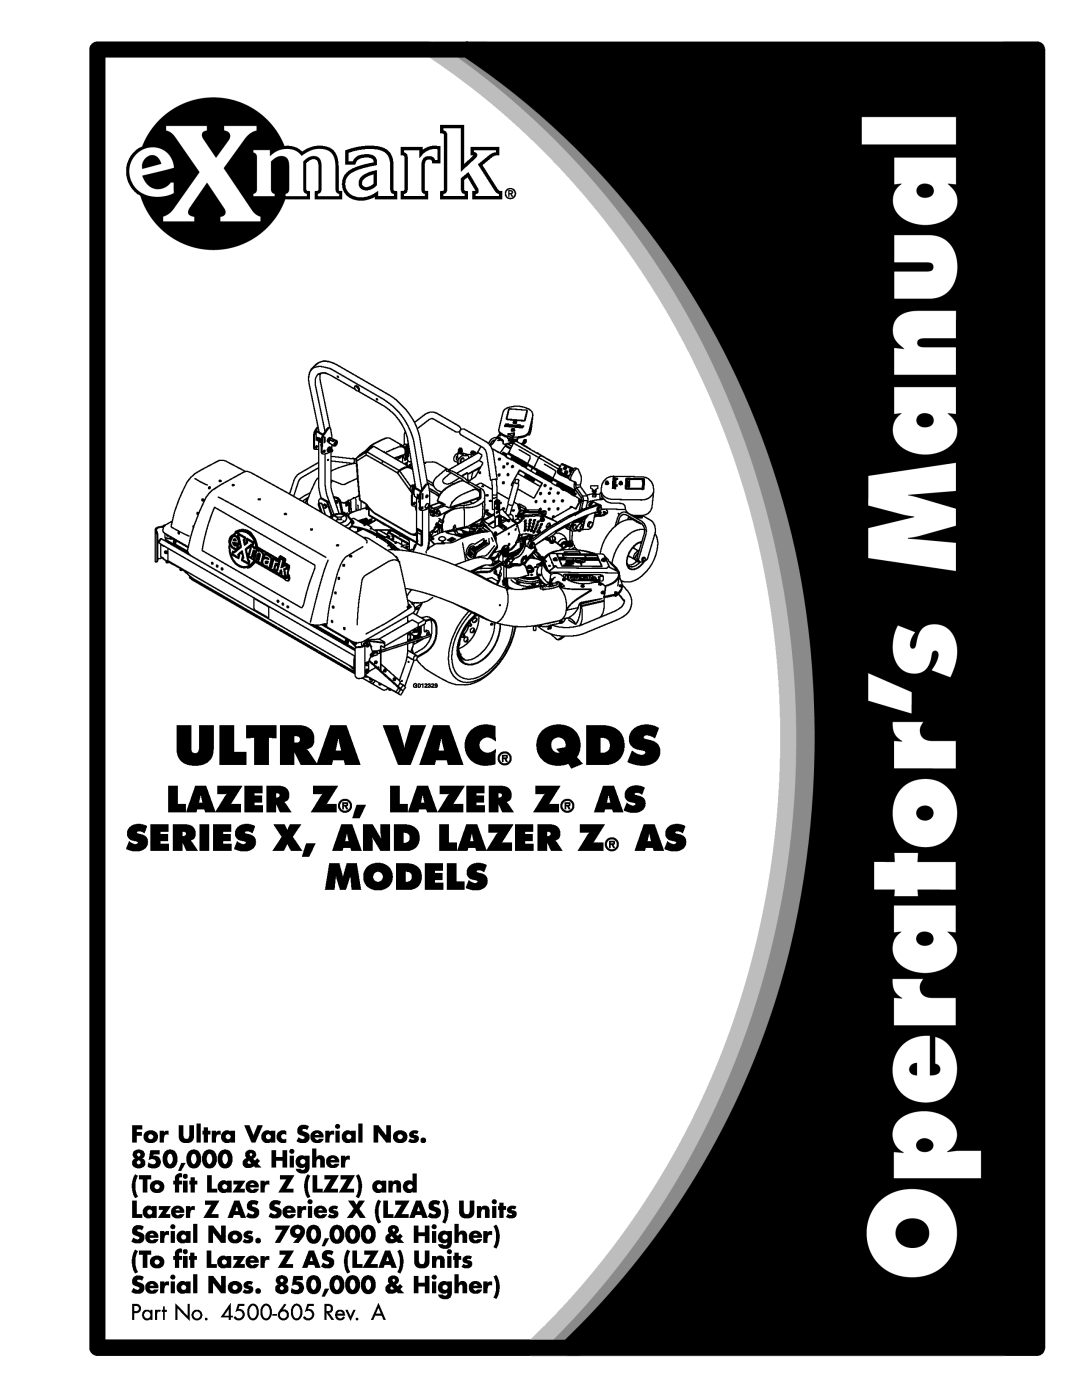 Exmark manual Quest Bagger, For Serial Nos 850,000 & Higher, Part No. 4500-653Rev. A 